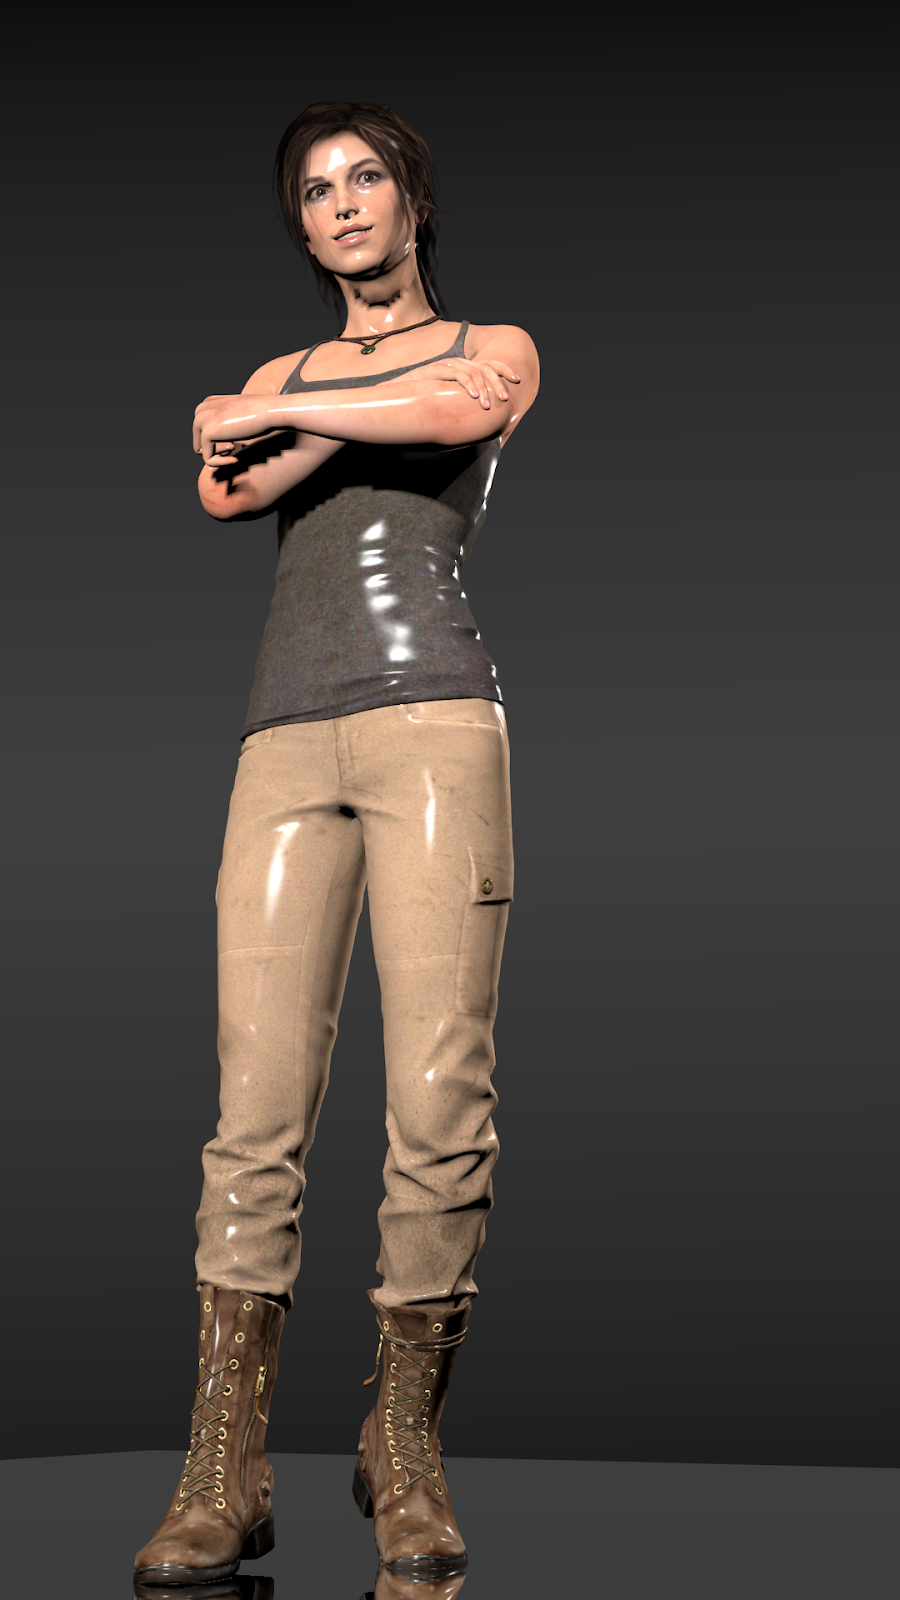 Lara croft 3d character example.png